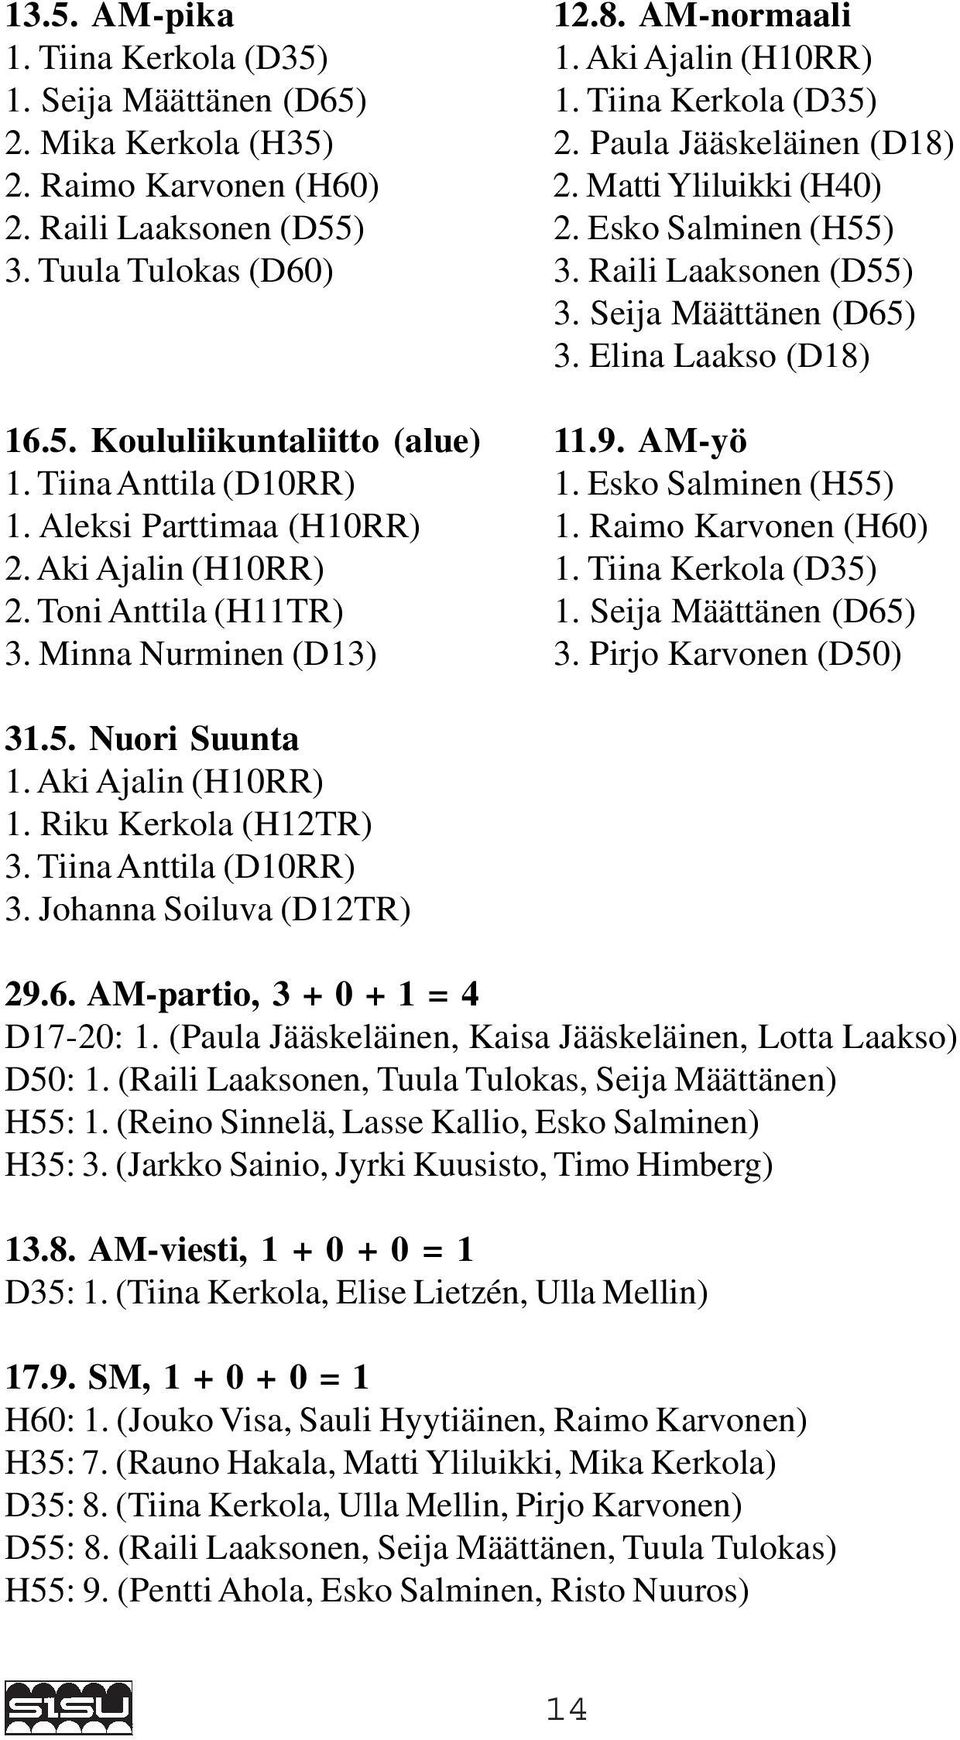 9. AM-yö 1. Tiina Anttila (D10RR) 1. Esko Salminen (H55) 1. Aleksi Parttimaa (H10RR) 1. Raimo Karvonen (H60) 2. Aki Ajalin (H10RR) 1. Tiina Kerkola (D35) 2. Toni Anttila (H11TR) 1.